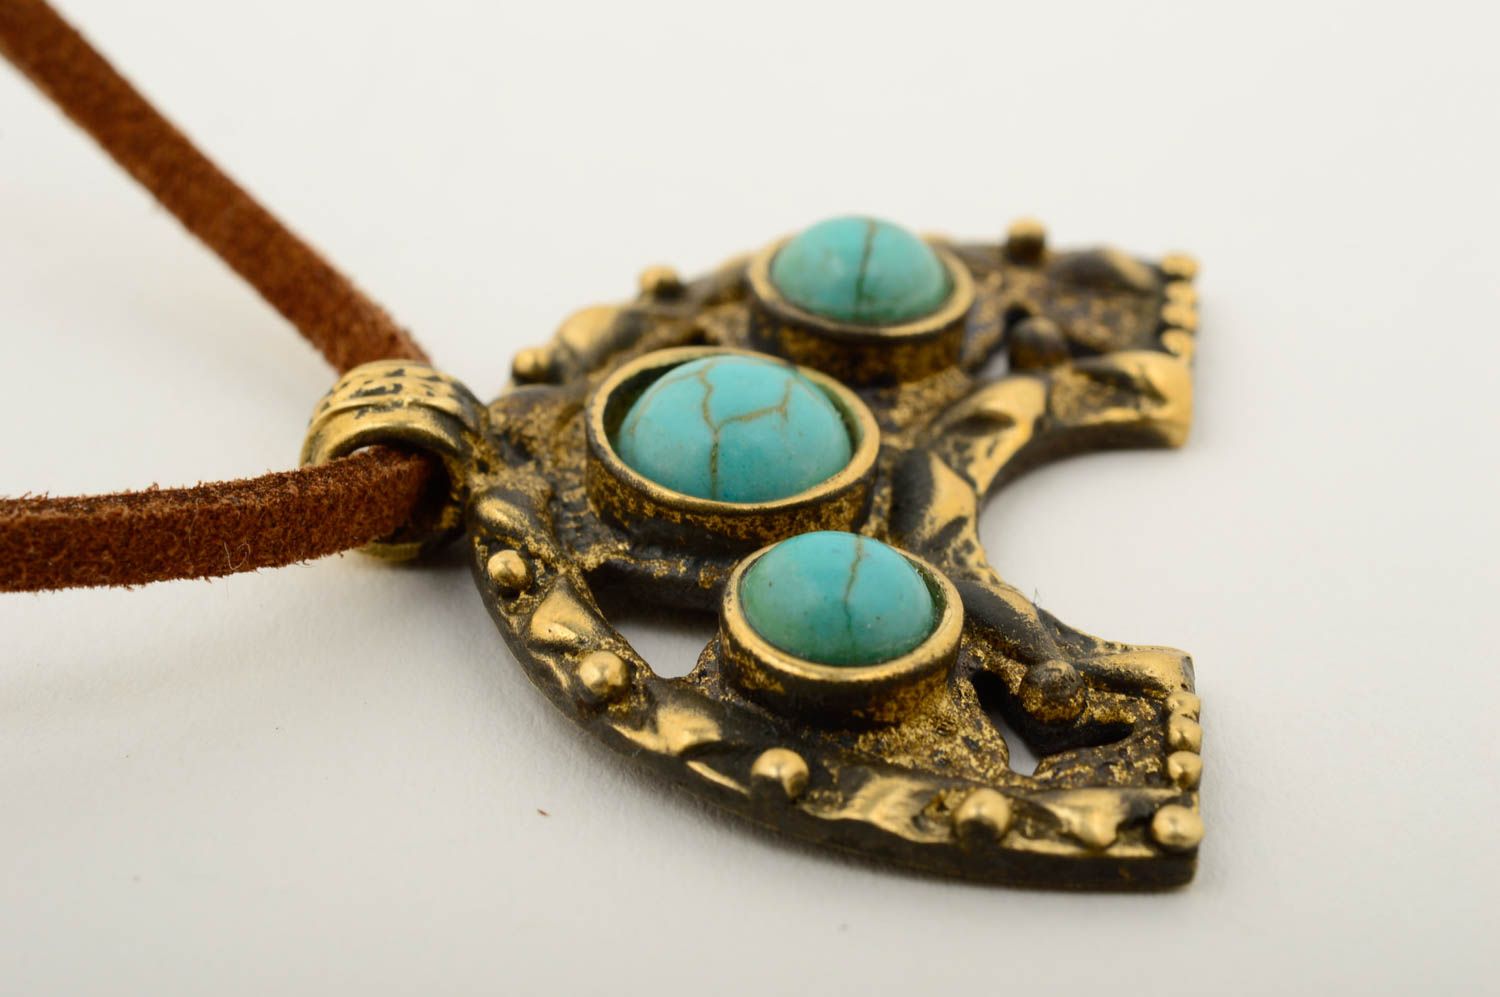 Handmade pendant with turquoise unusual metal pendant designer accessory photo 4